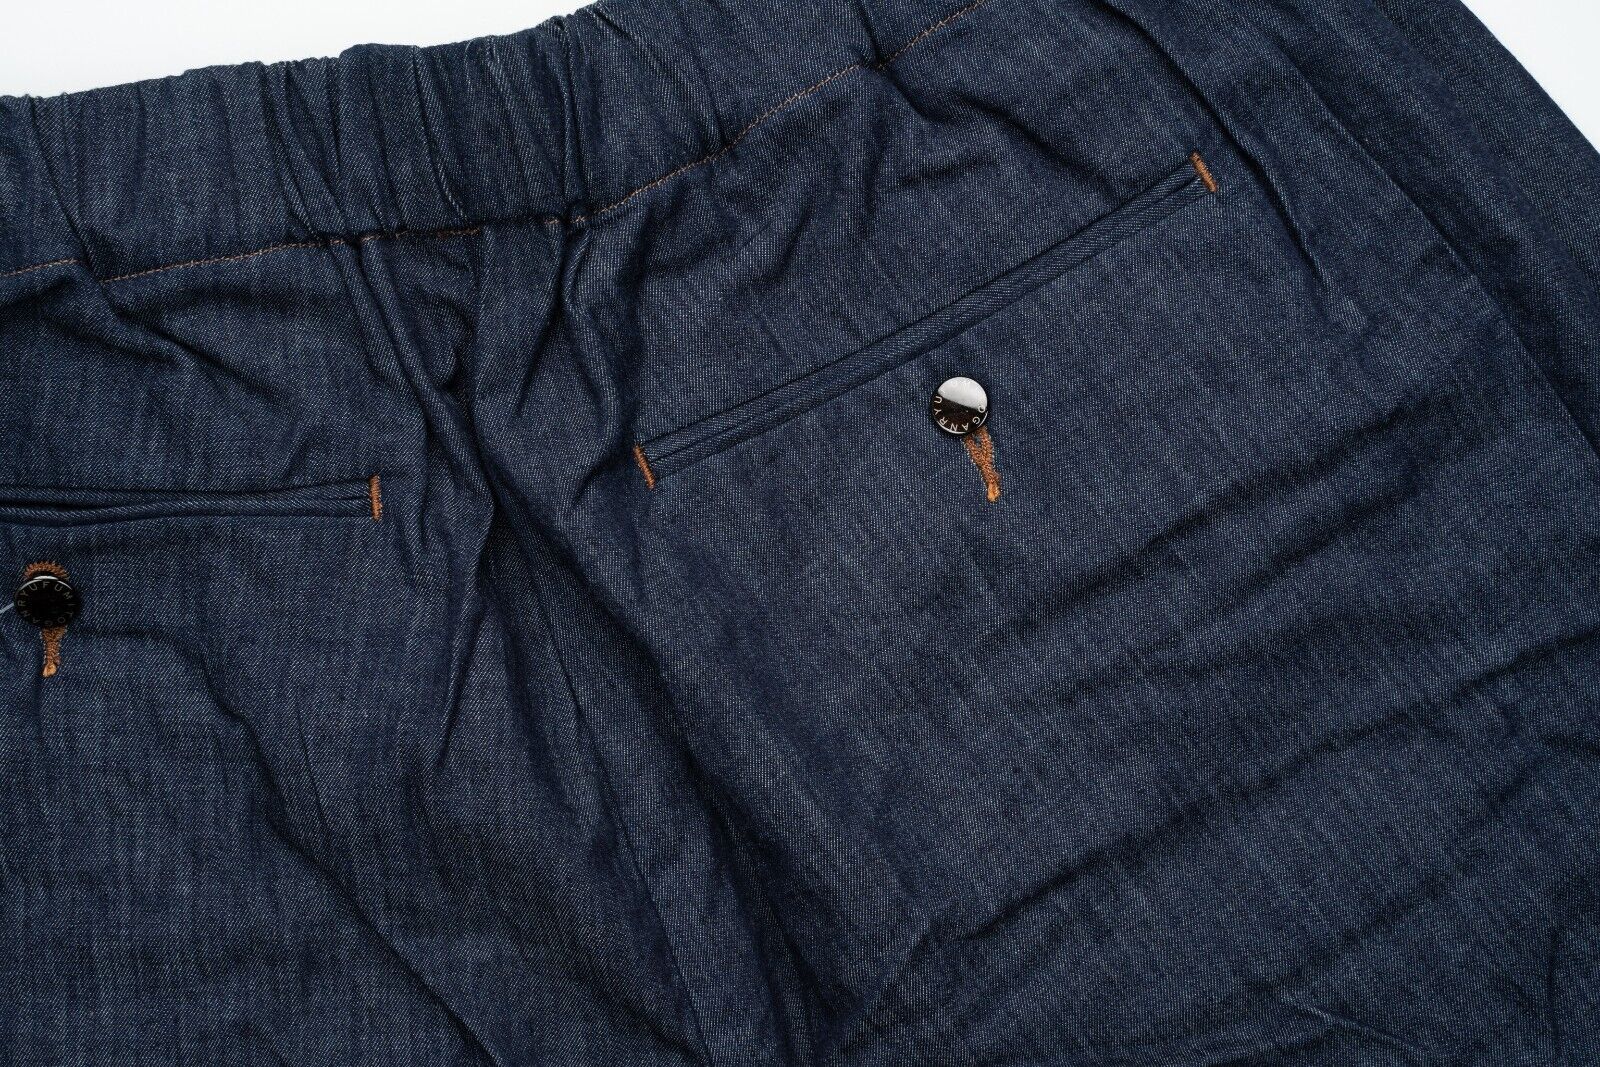 NWT FUMITO GANRYU Made in Japan Navy Denim Cotton Long Shorts 1 Fits L